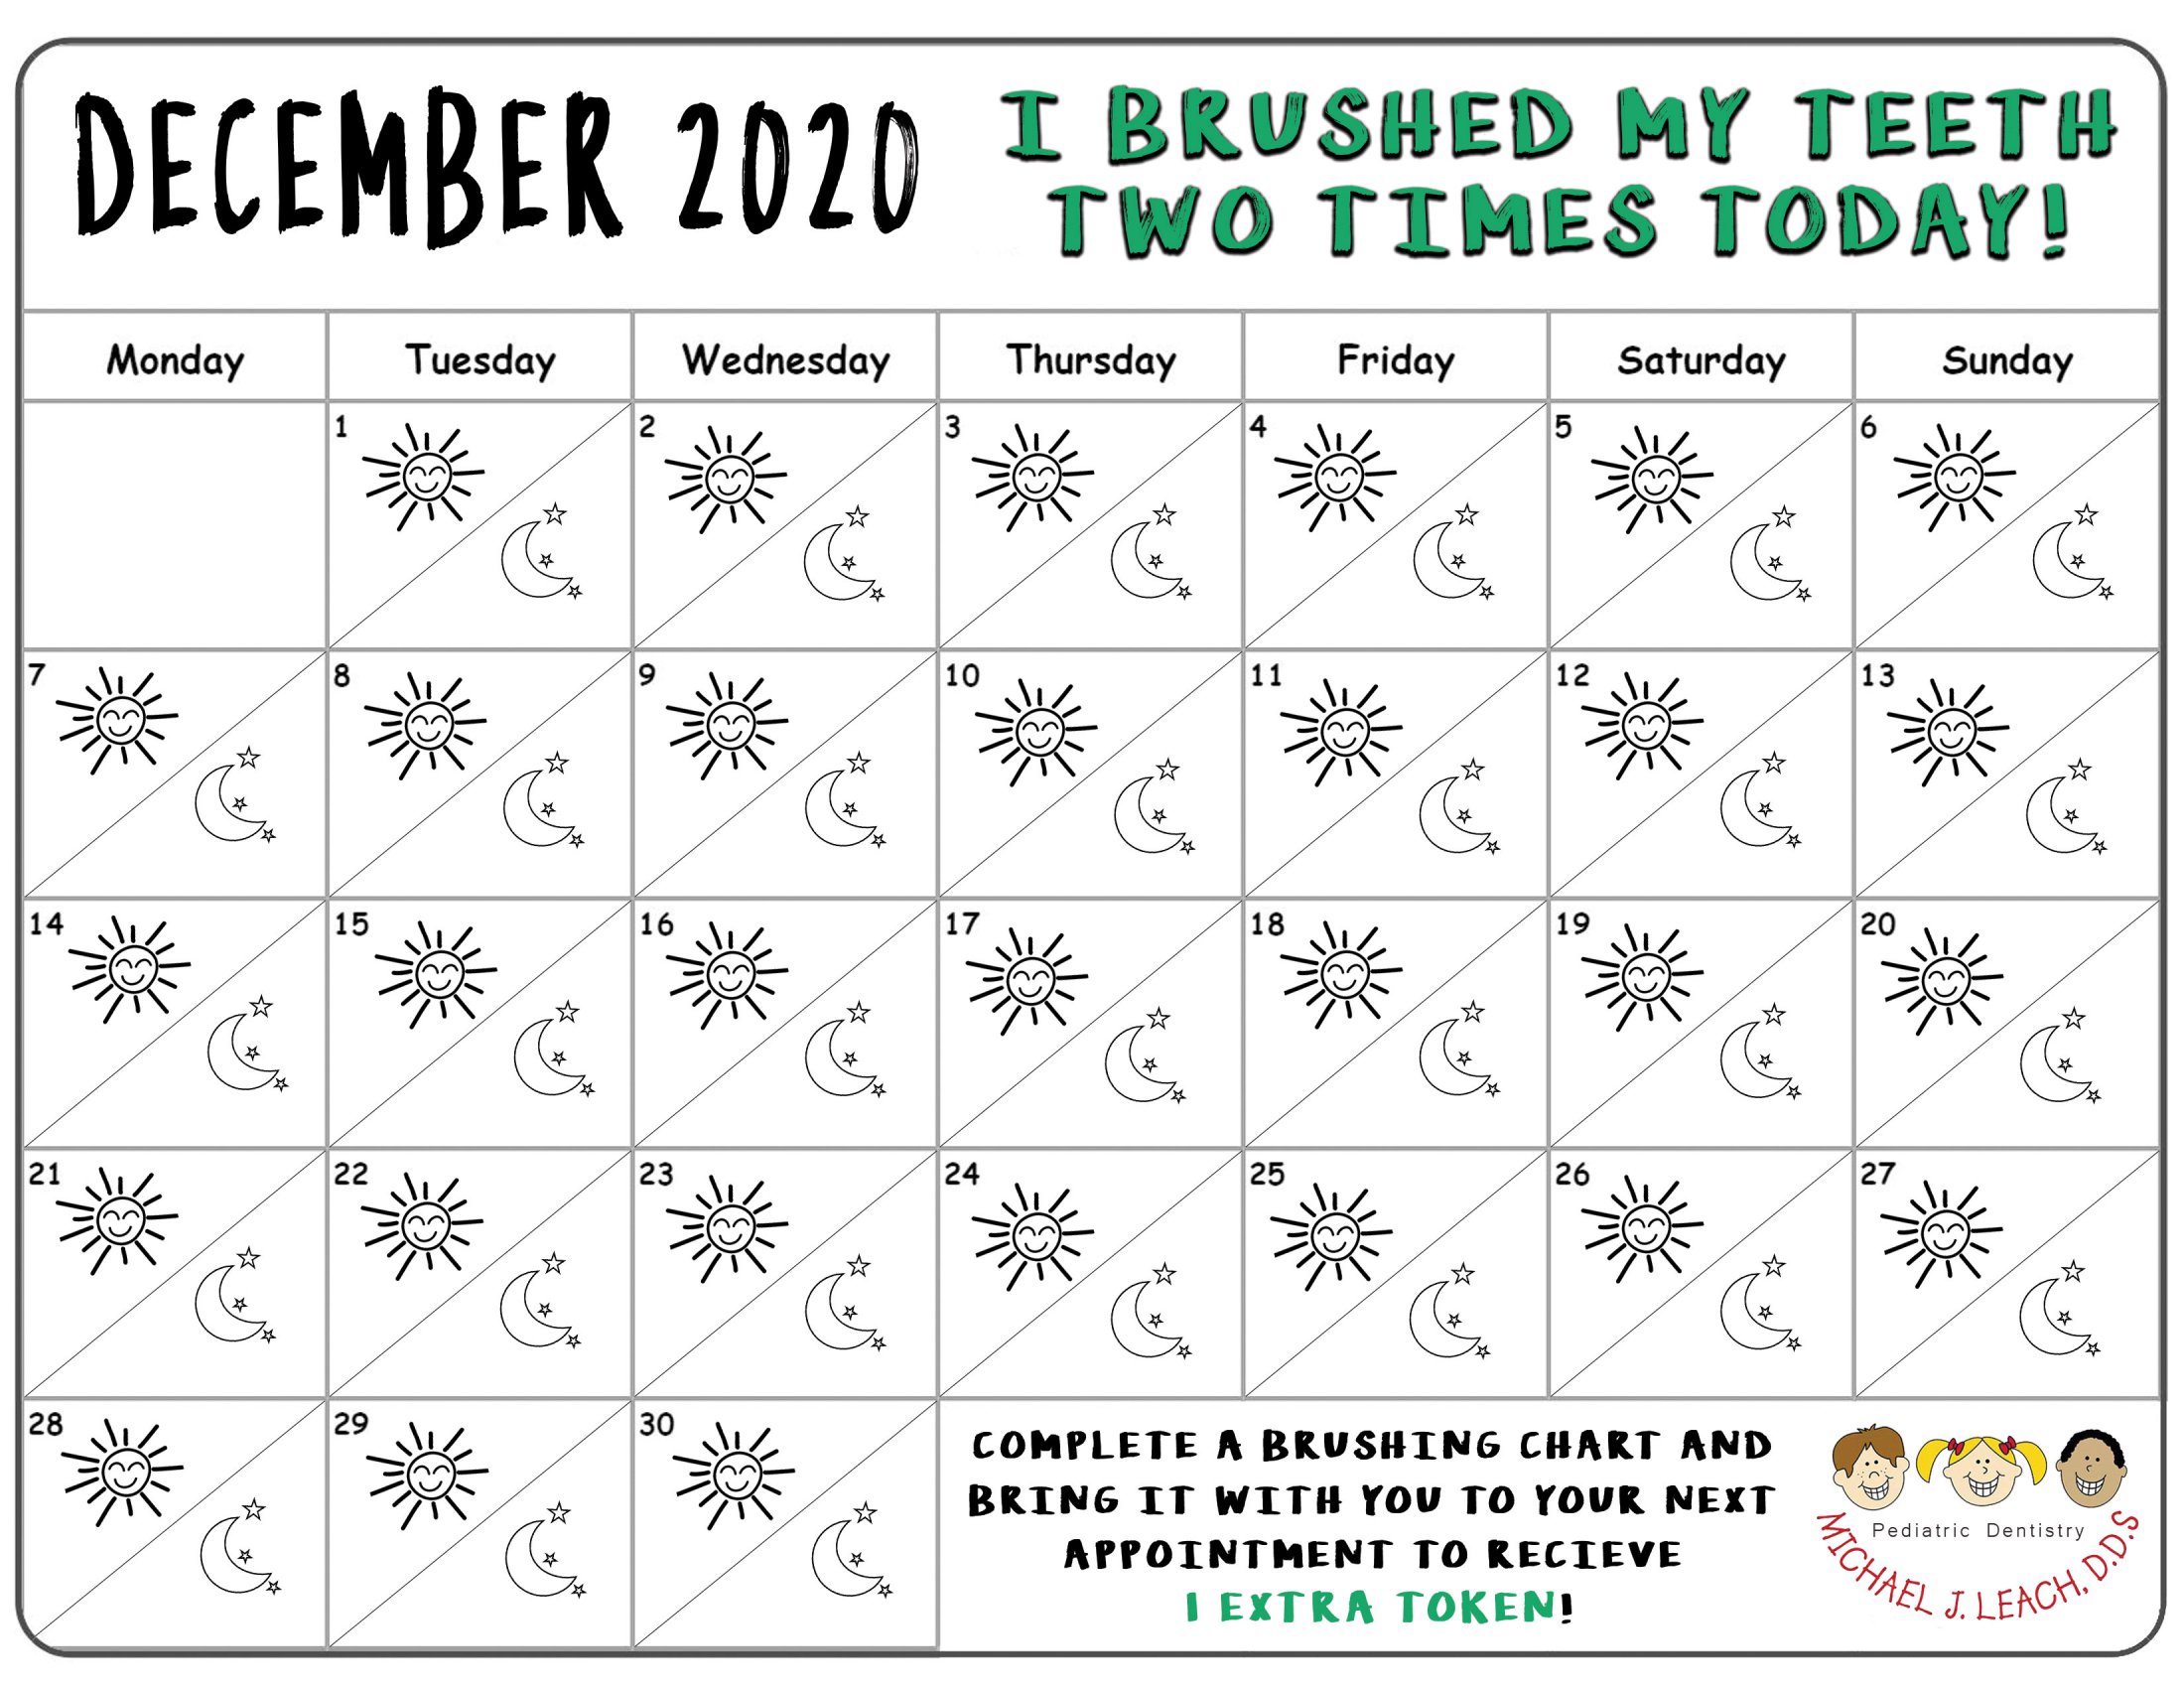 December 2020 Brushing Chart